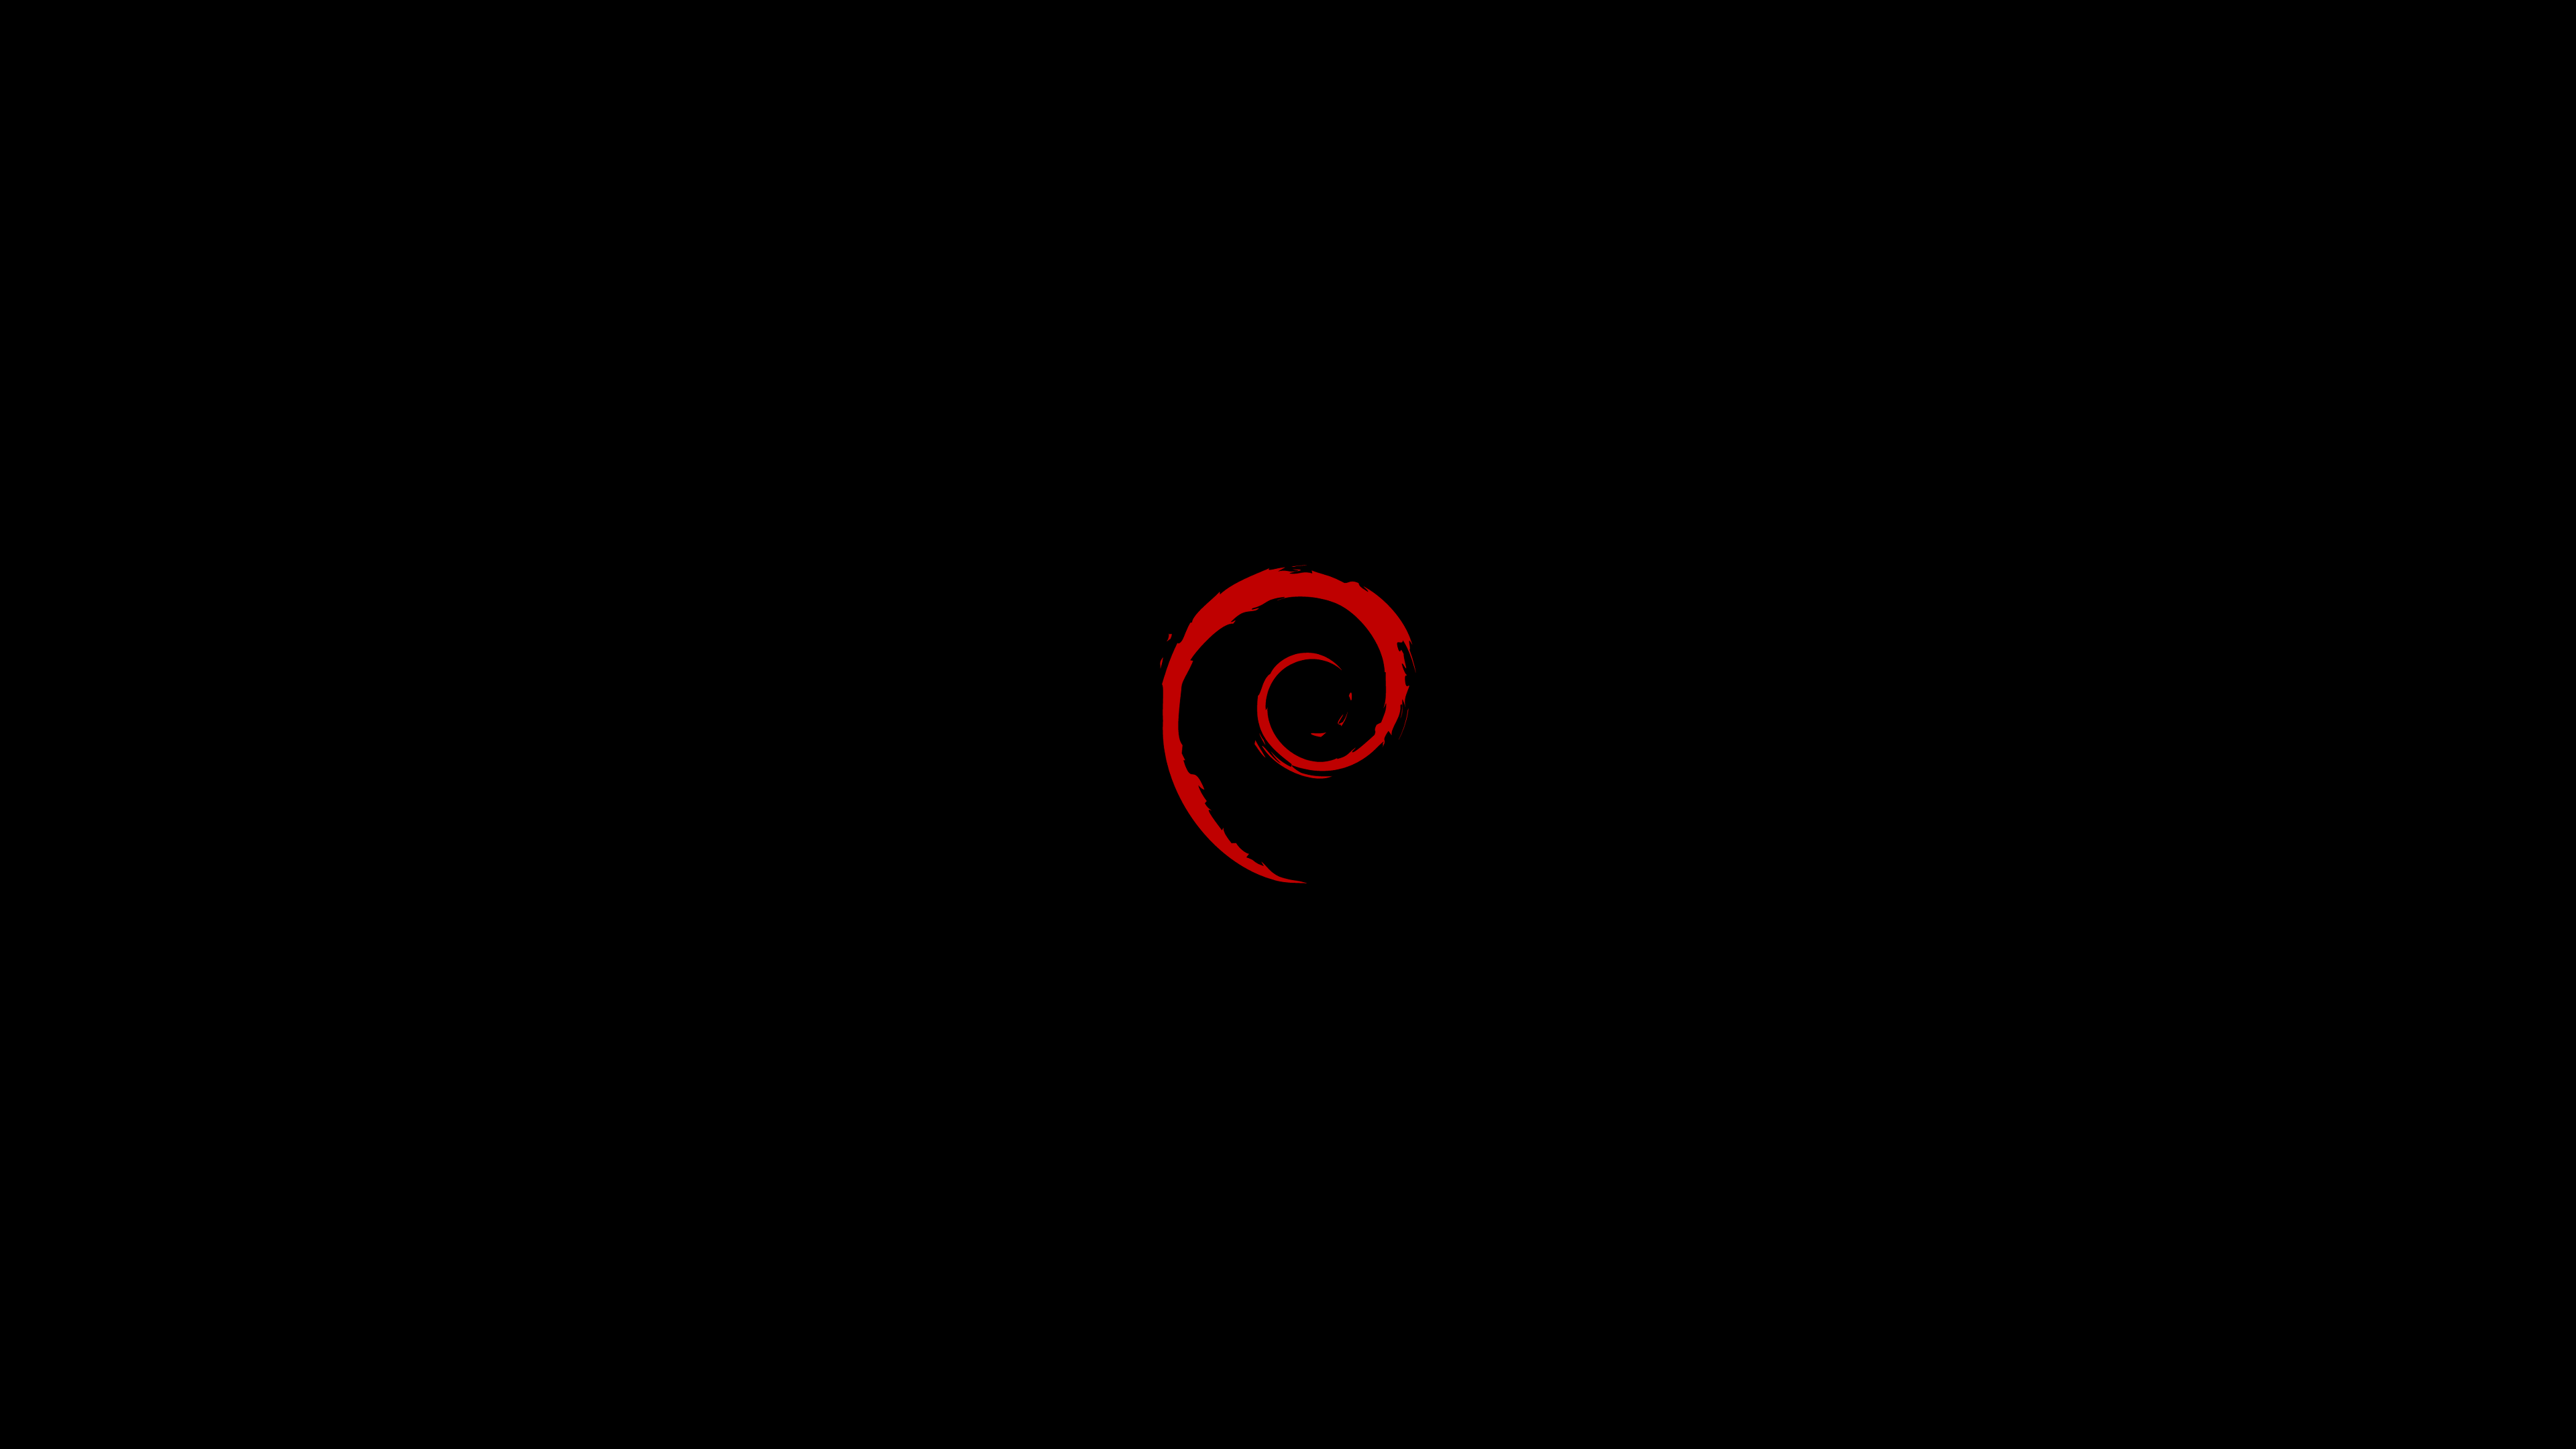 General 3840x2160 golden ratio minimalism Debian simple background black background swirls operating system